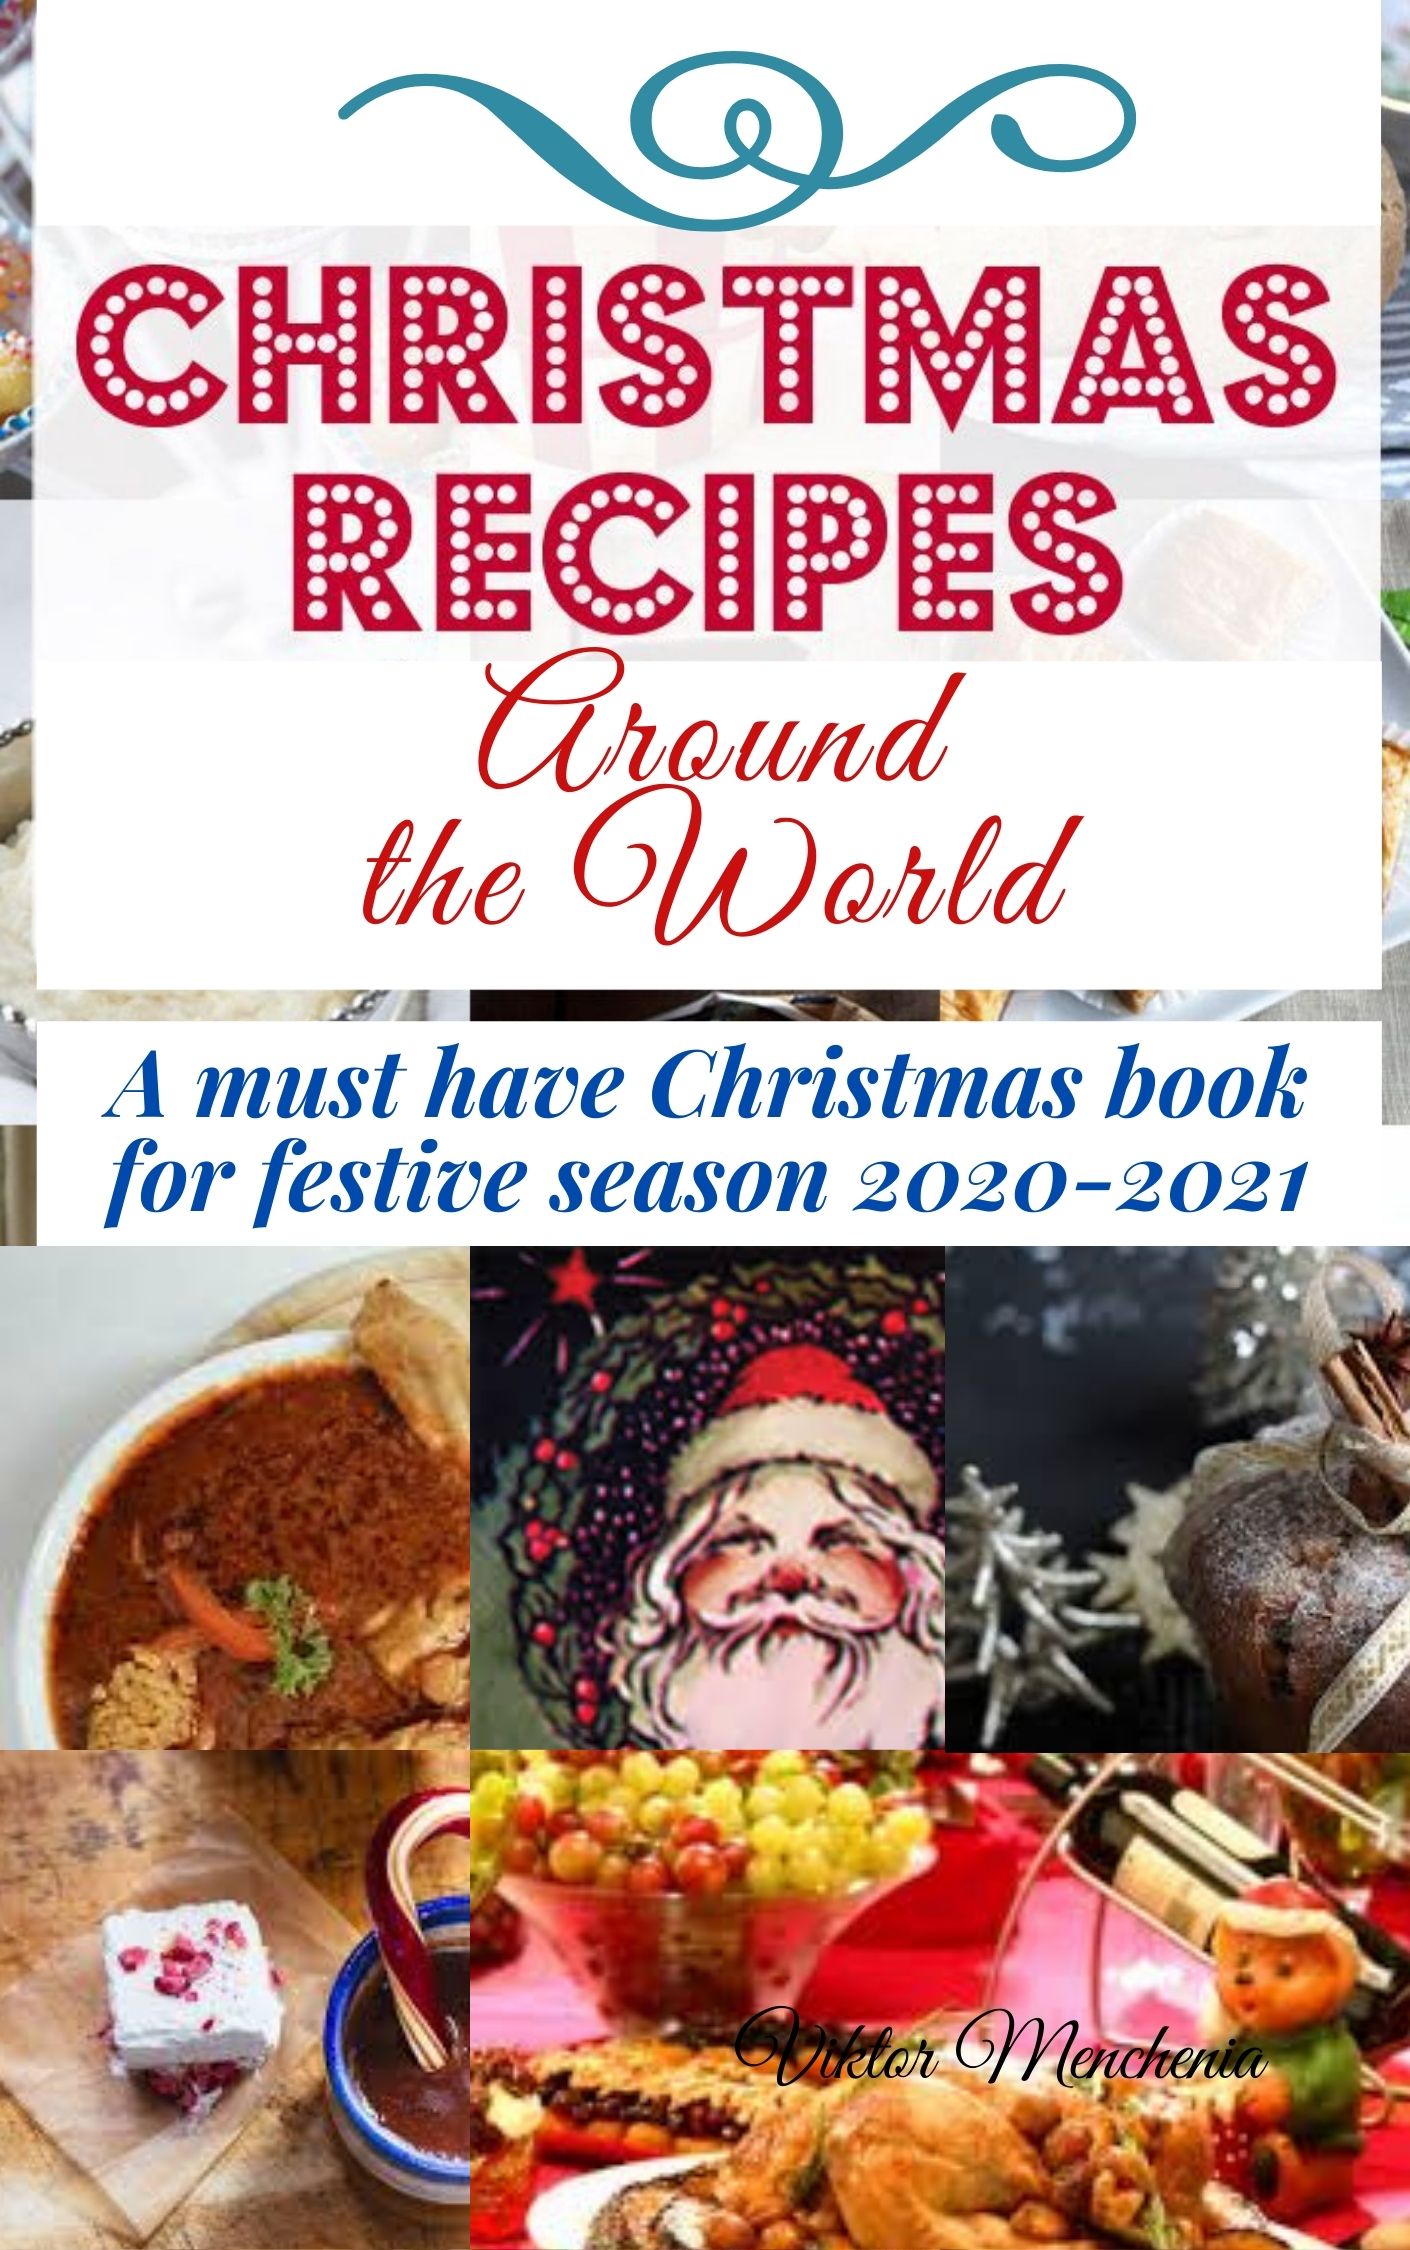 FREE: Christmas Recipes Around the World by Mencheia Viktor